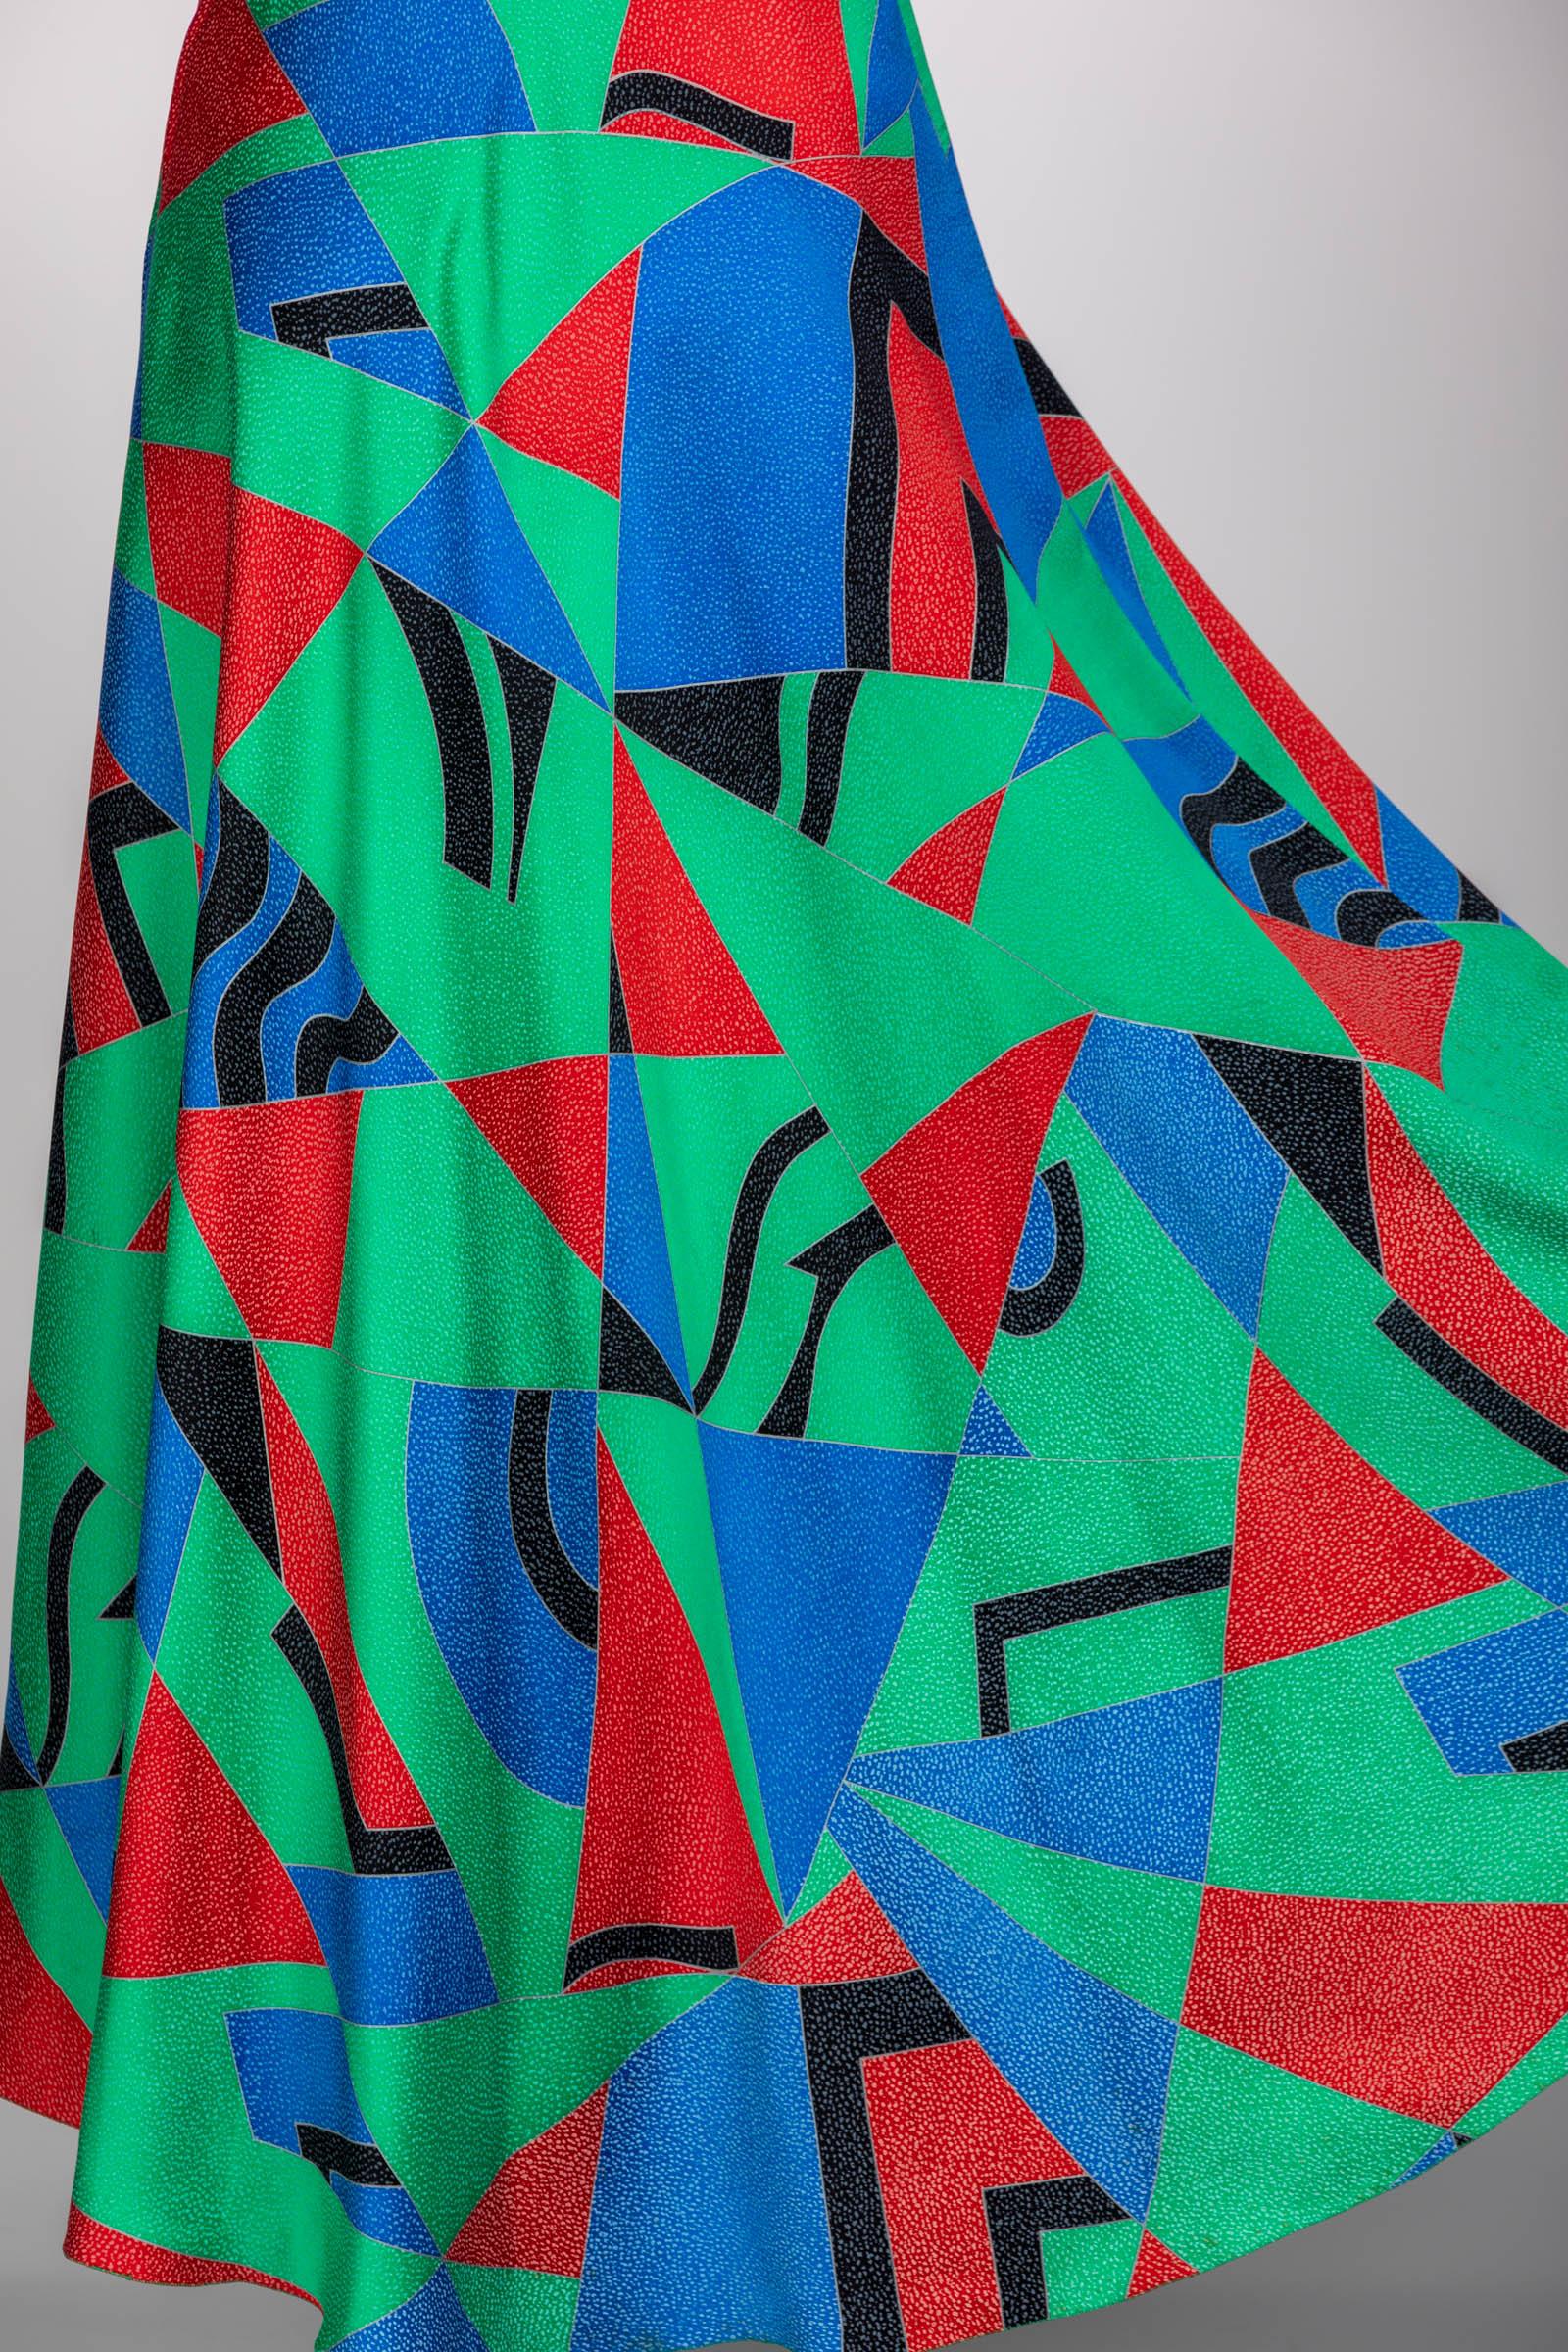 Chloe Karl Lagerfeld Cubist Green Silk Print Sleeveless Dress, 1970s For Sale 3